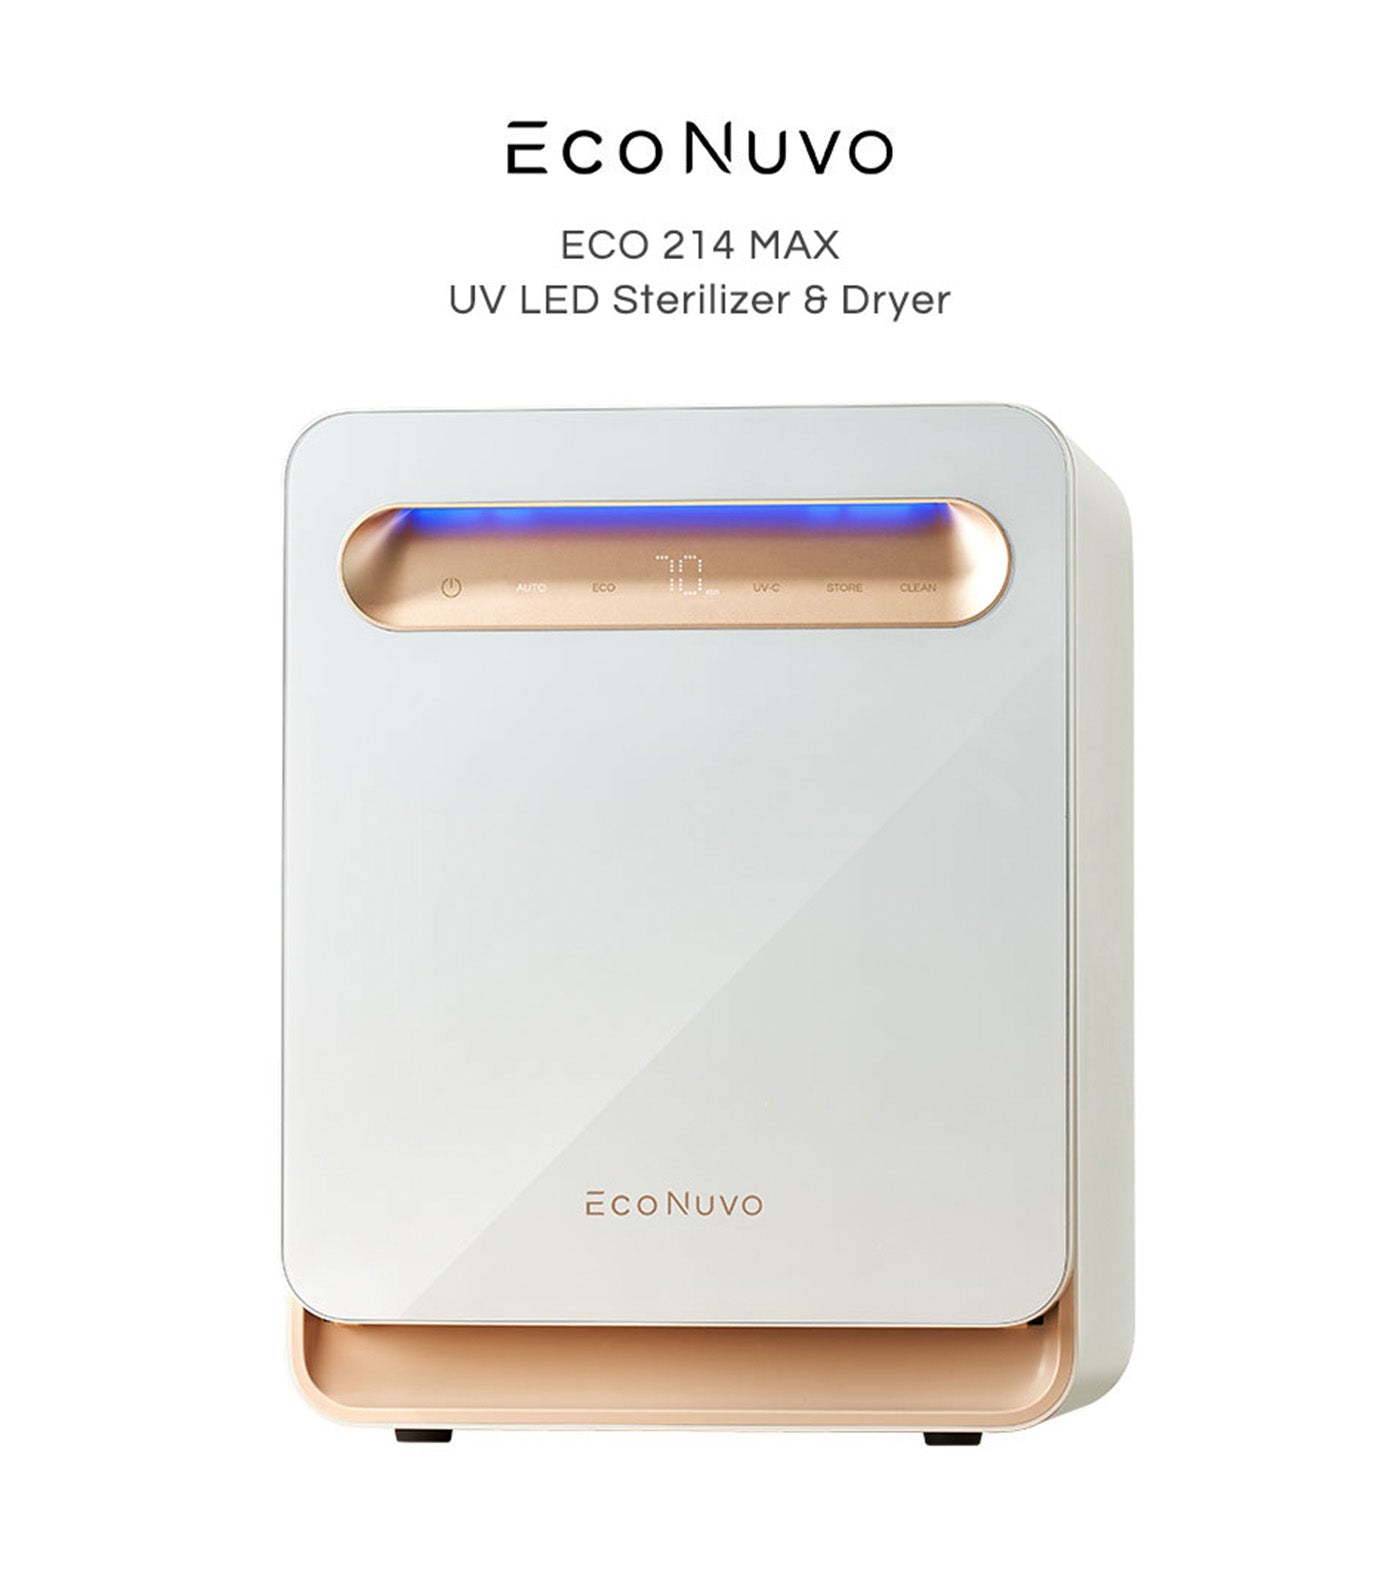 Eco 214 Max UV LED Sterilizer and Dryer